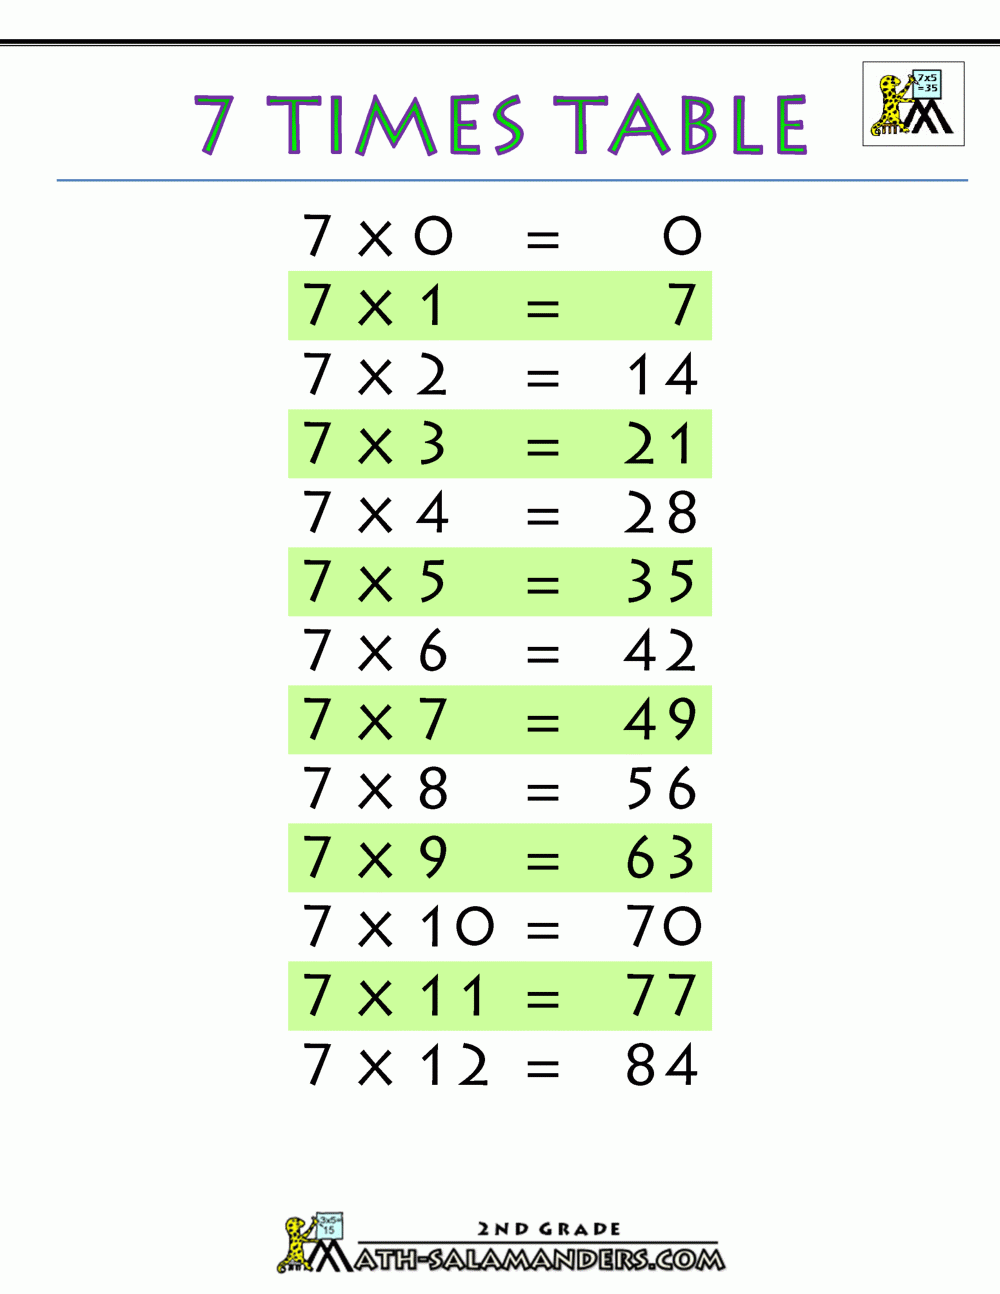 Table De 7 Jusqu A 100 7 Multiplication Table Printable | Printable Multiplication Flash Cards